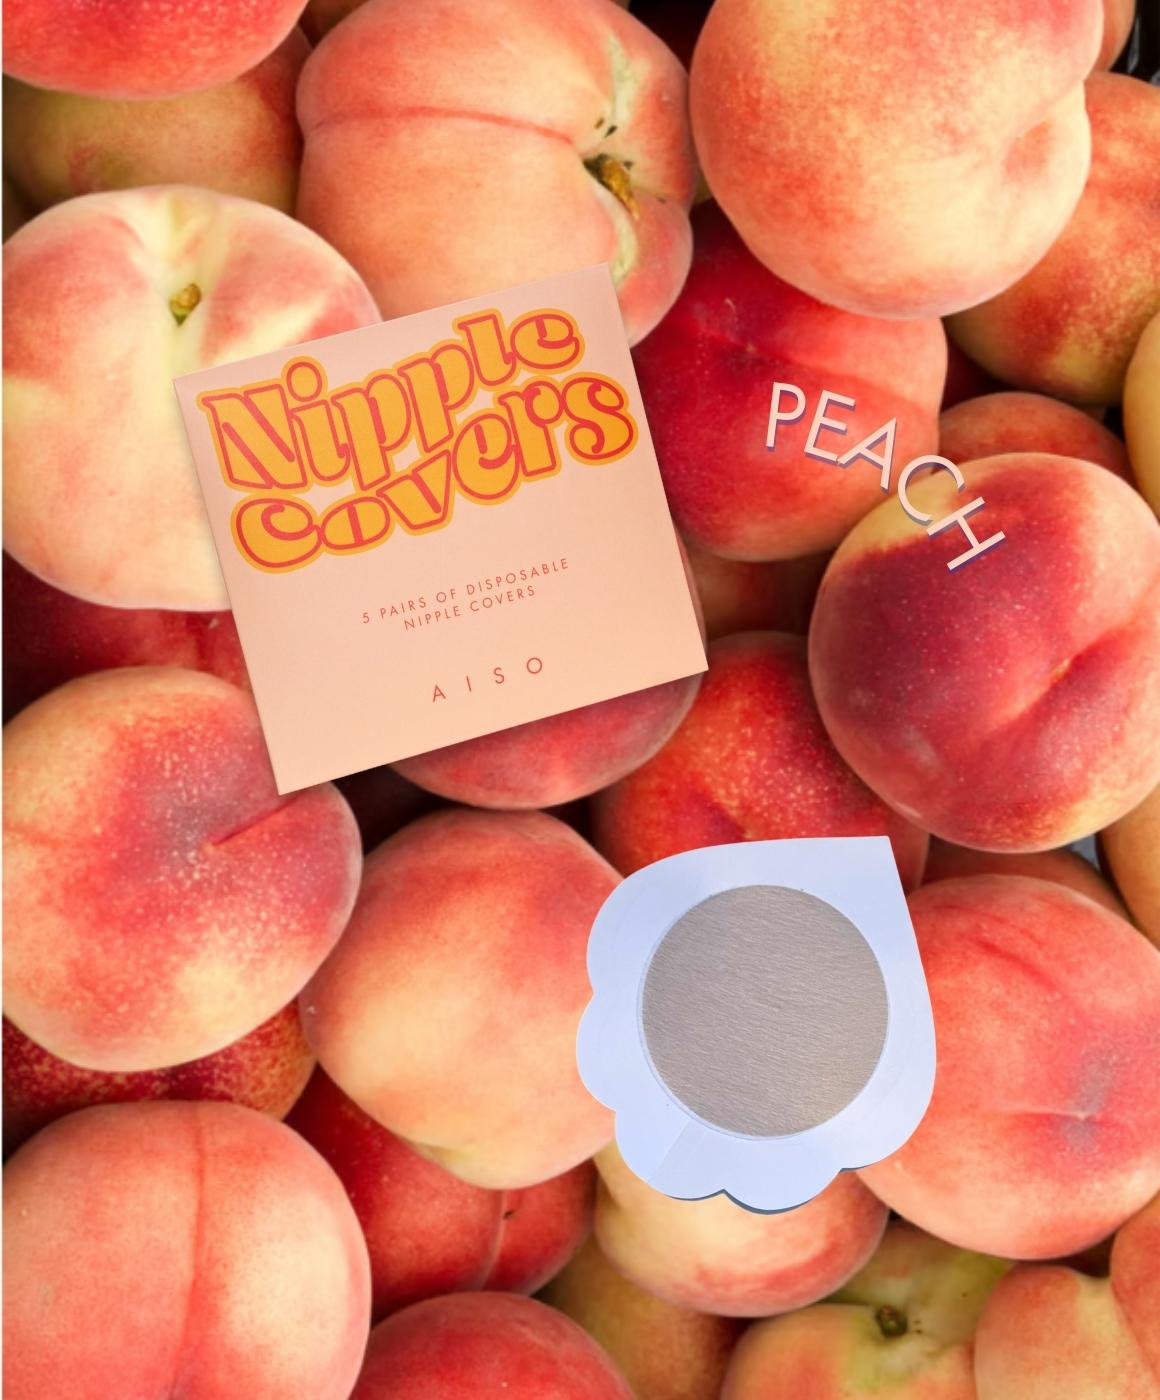 AISO Nipple Covers Peach, 5 par, Cino